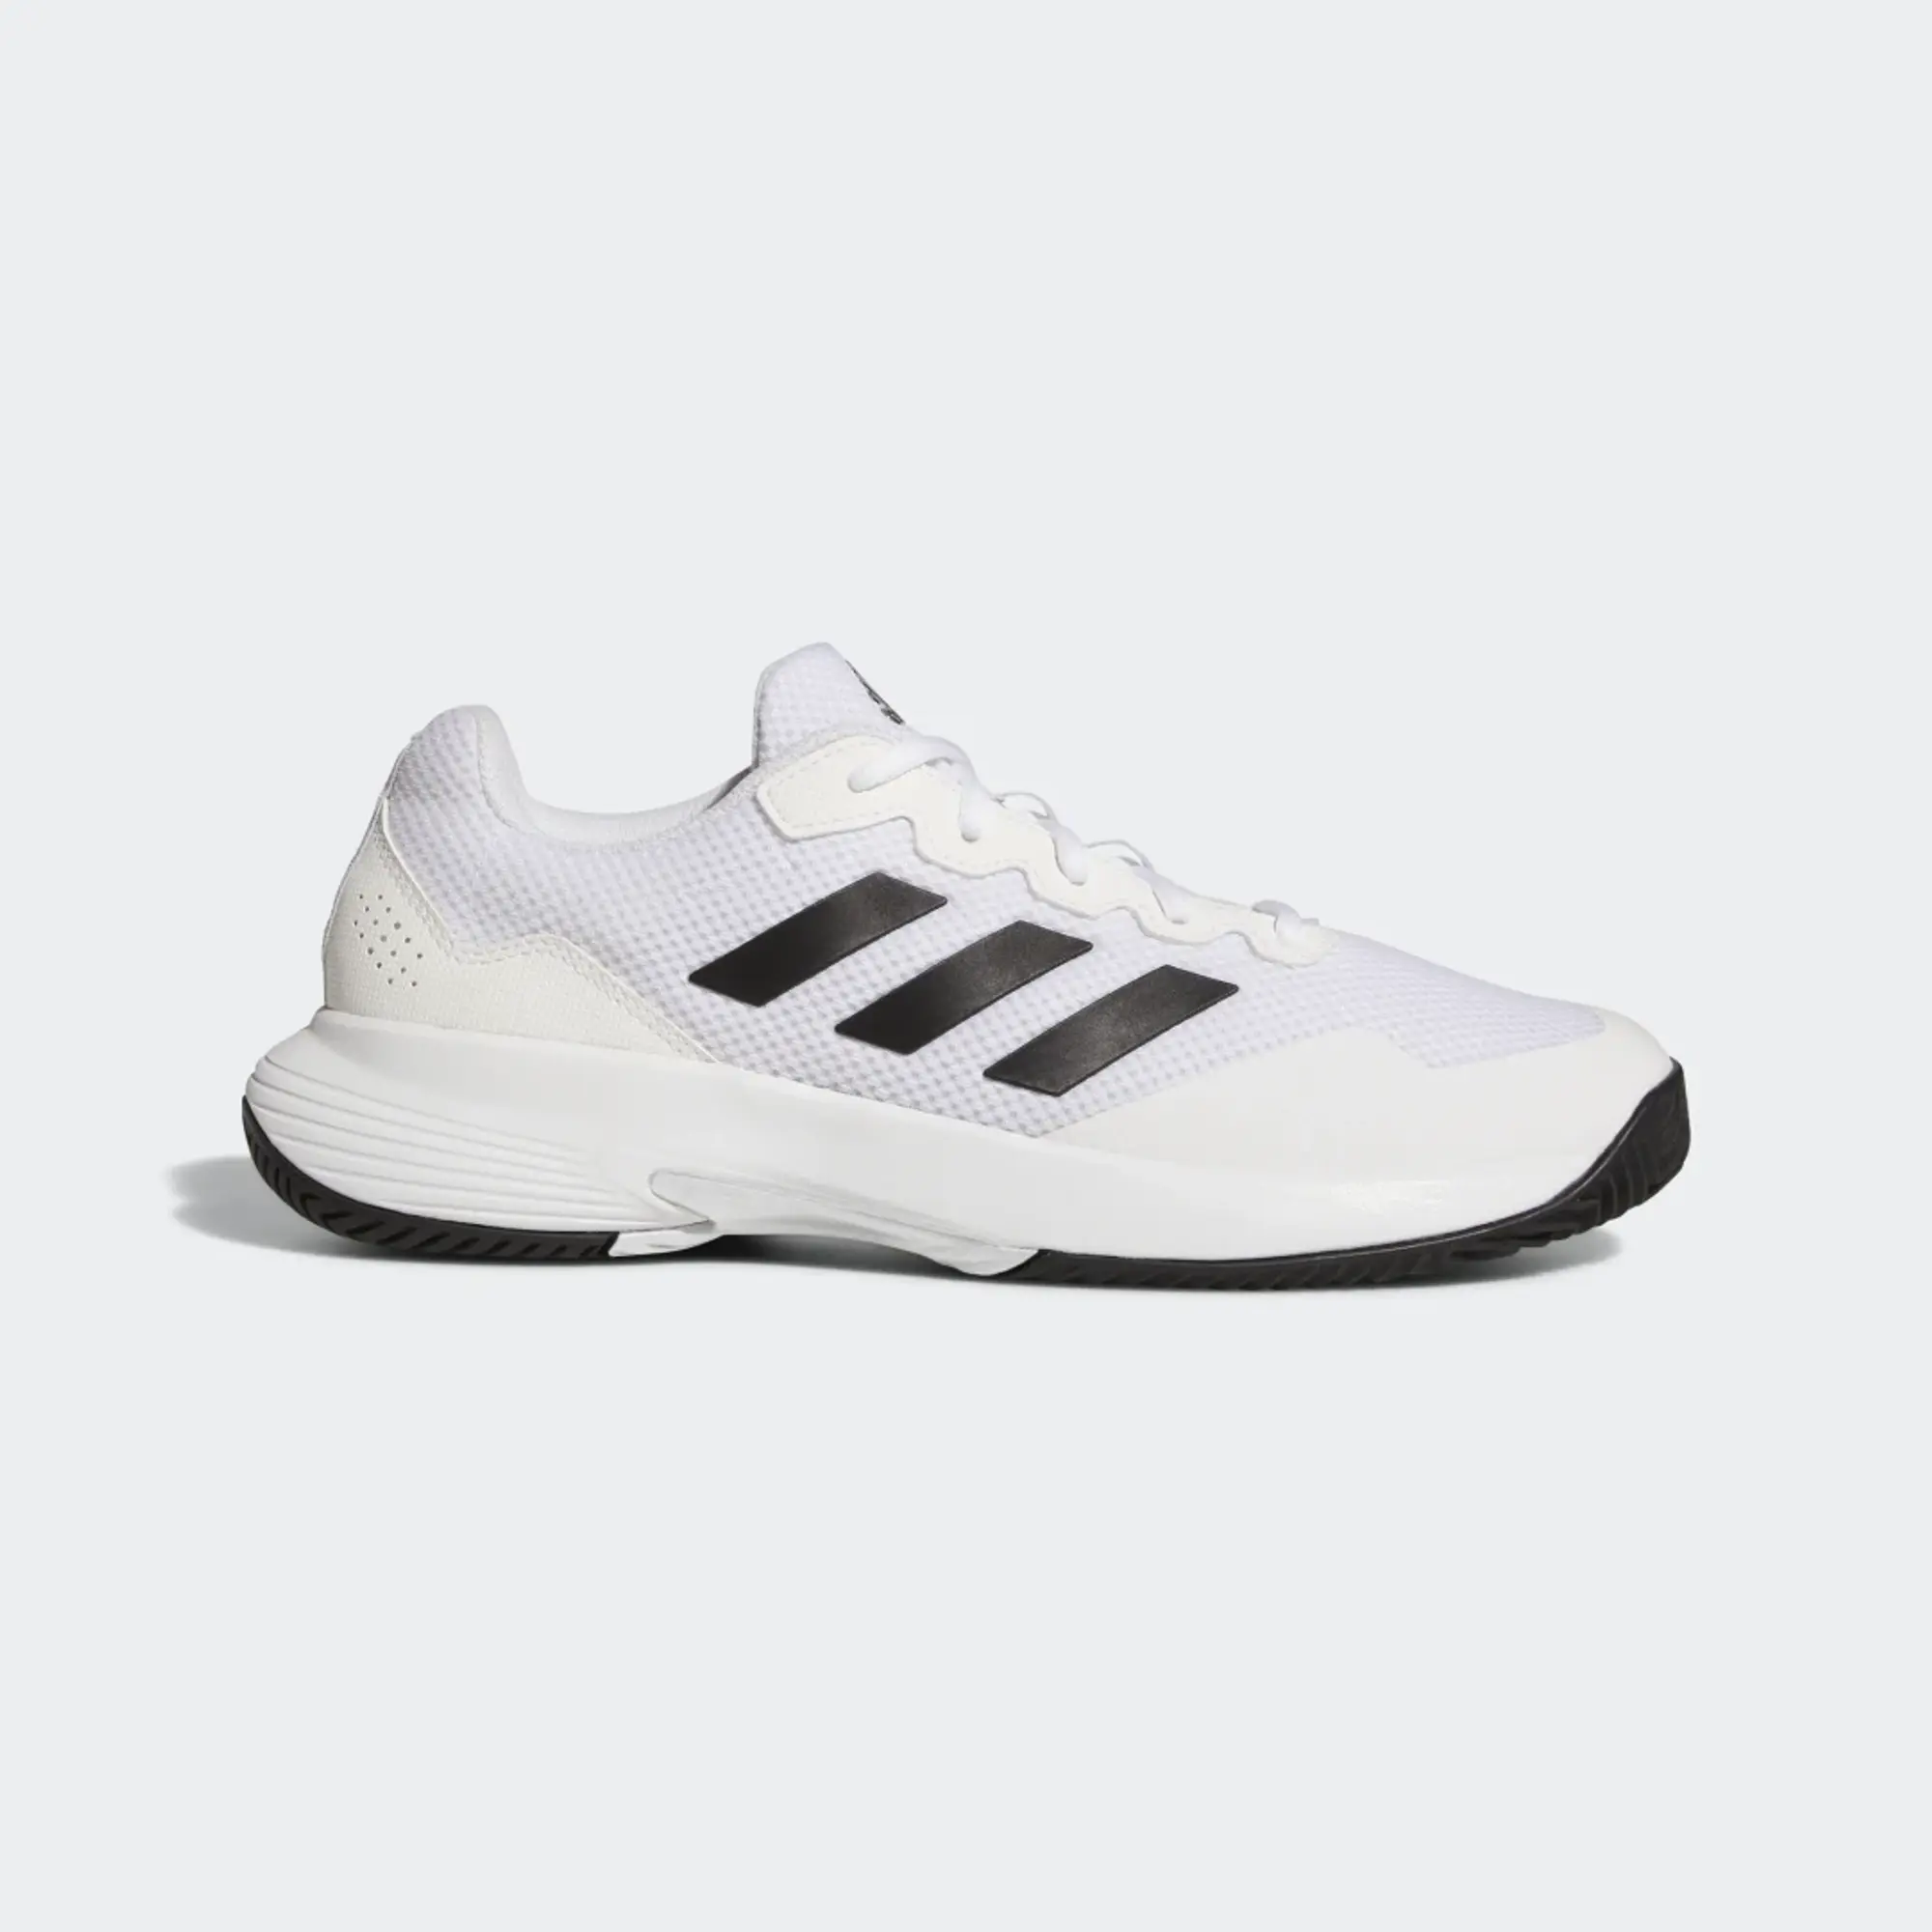 adidas Men's Multicourt Tennis Shoes Gamecourt - White/Black